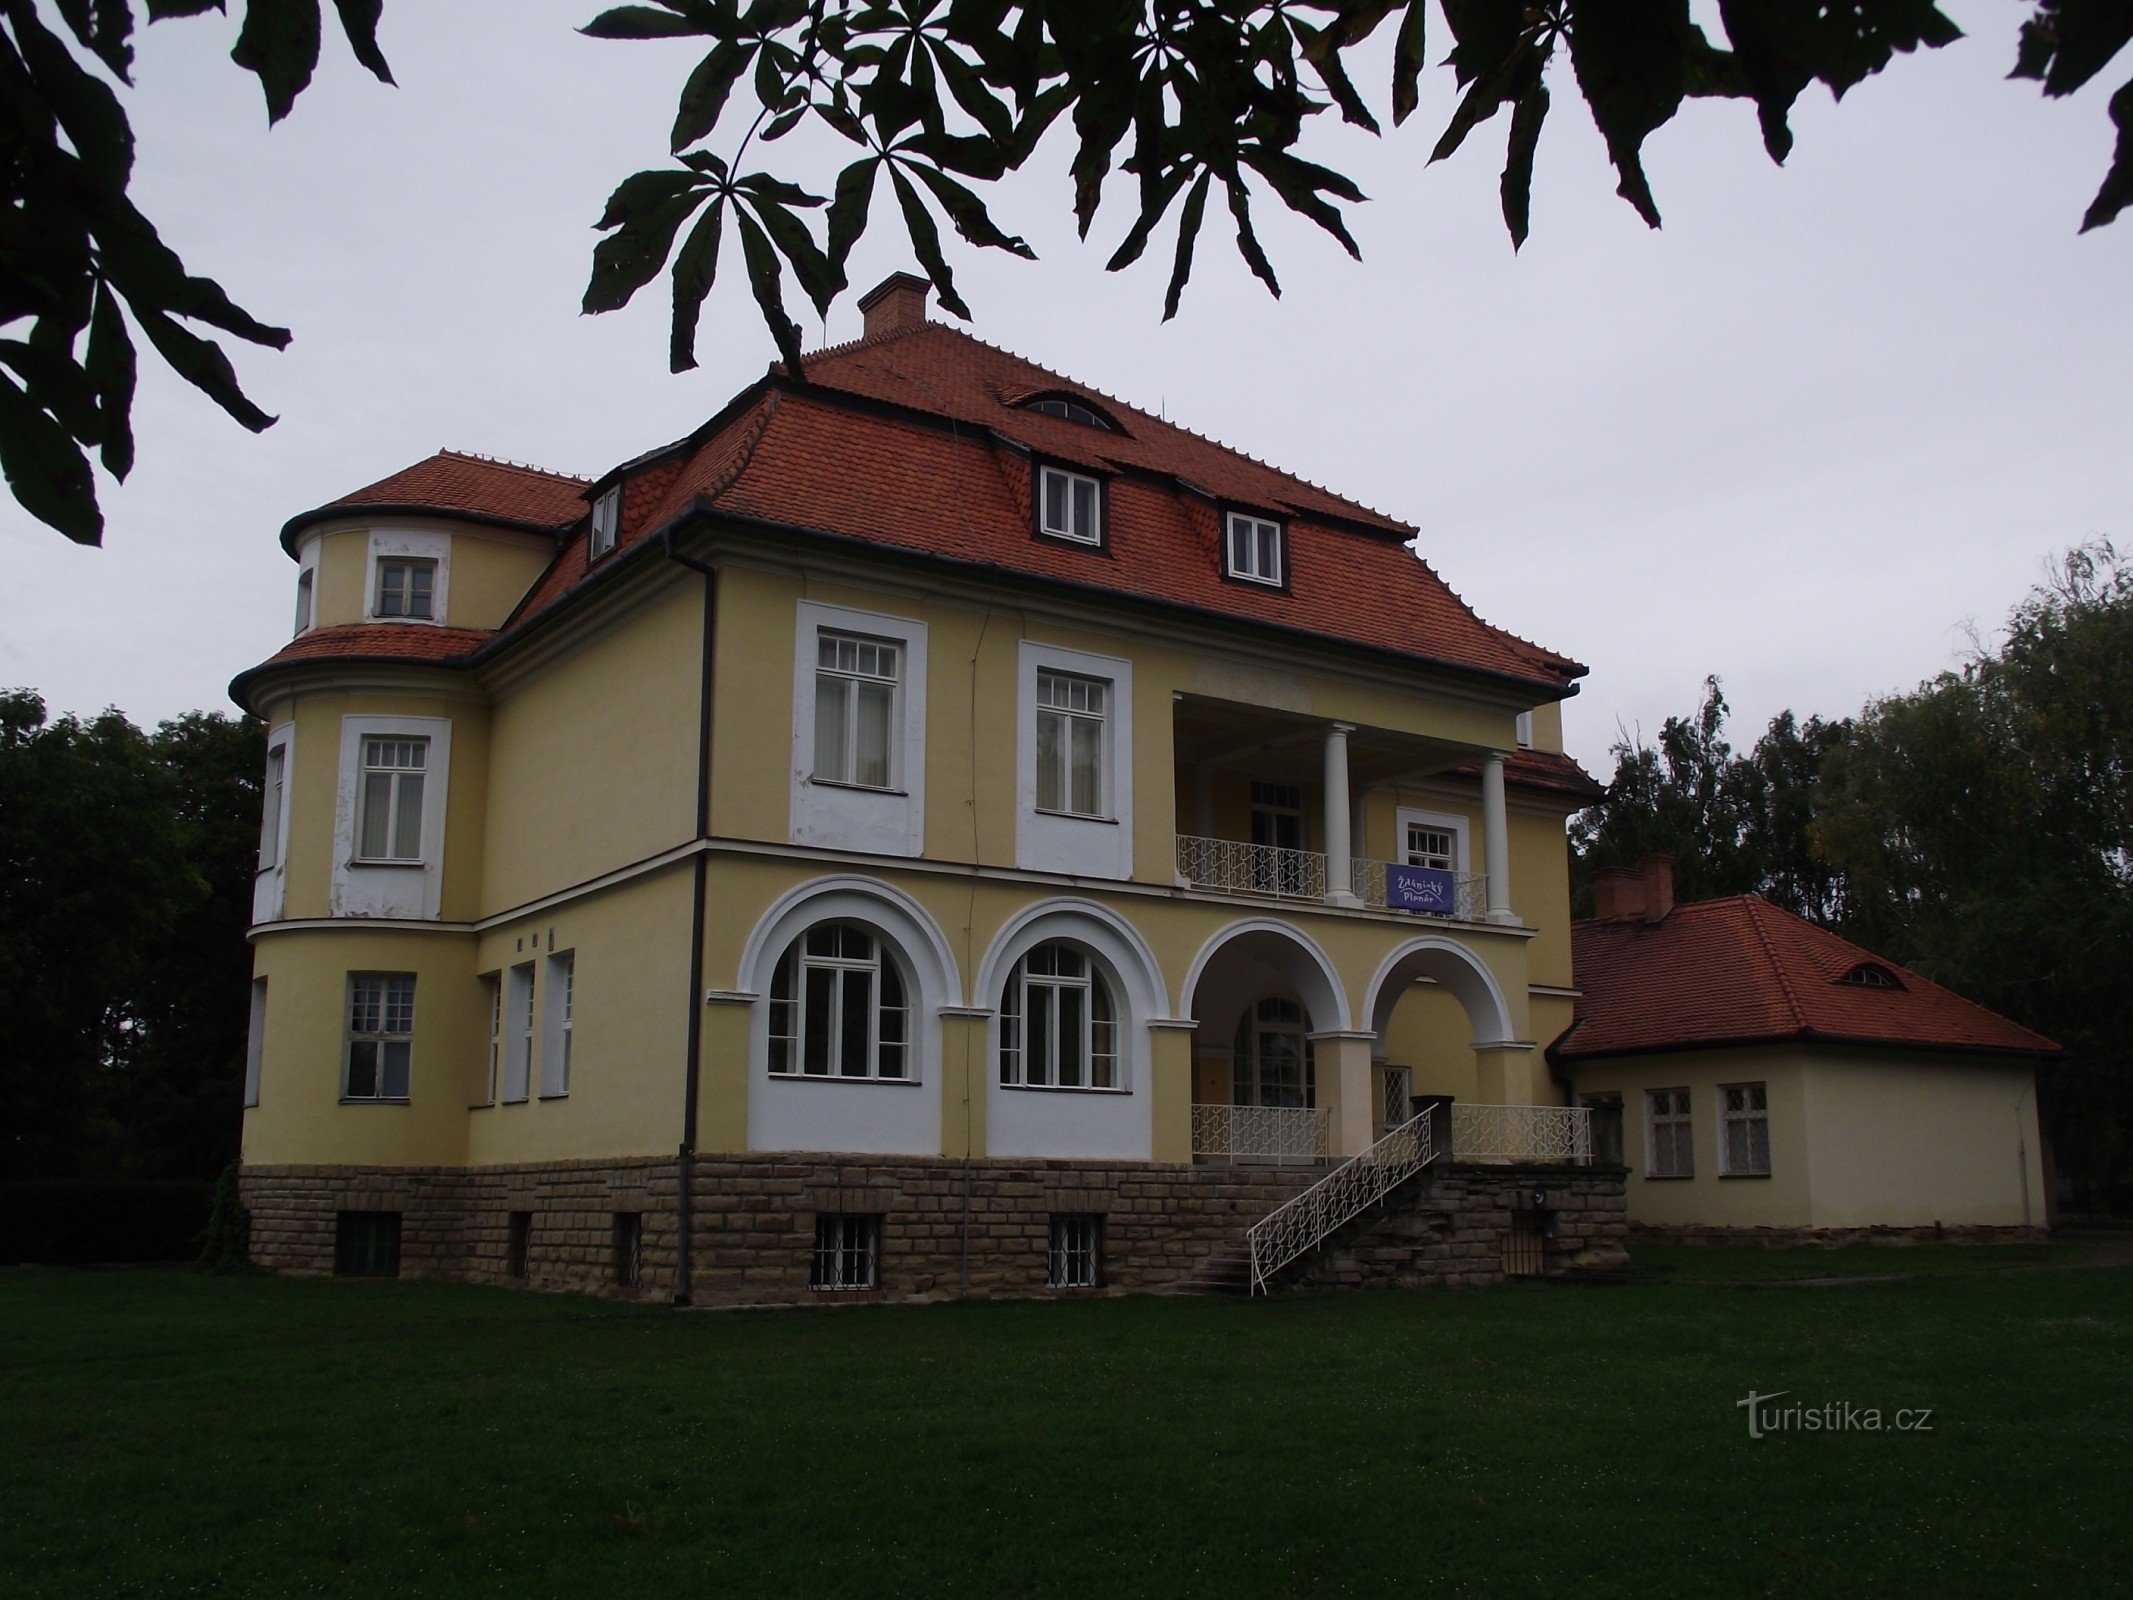 Ždánice – villa do castelo (Seidl's / Loudon's)